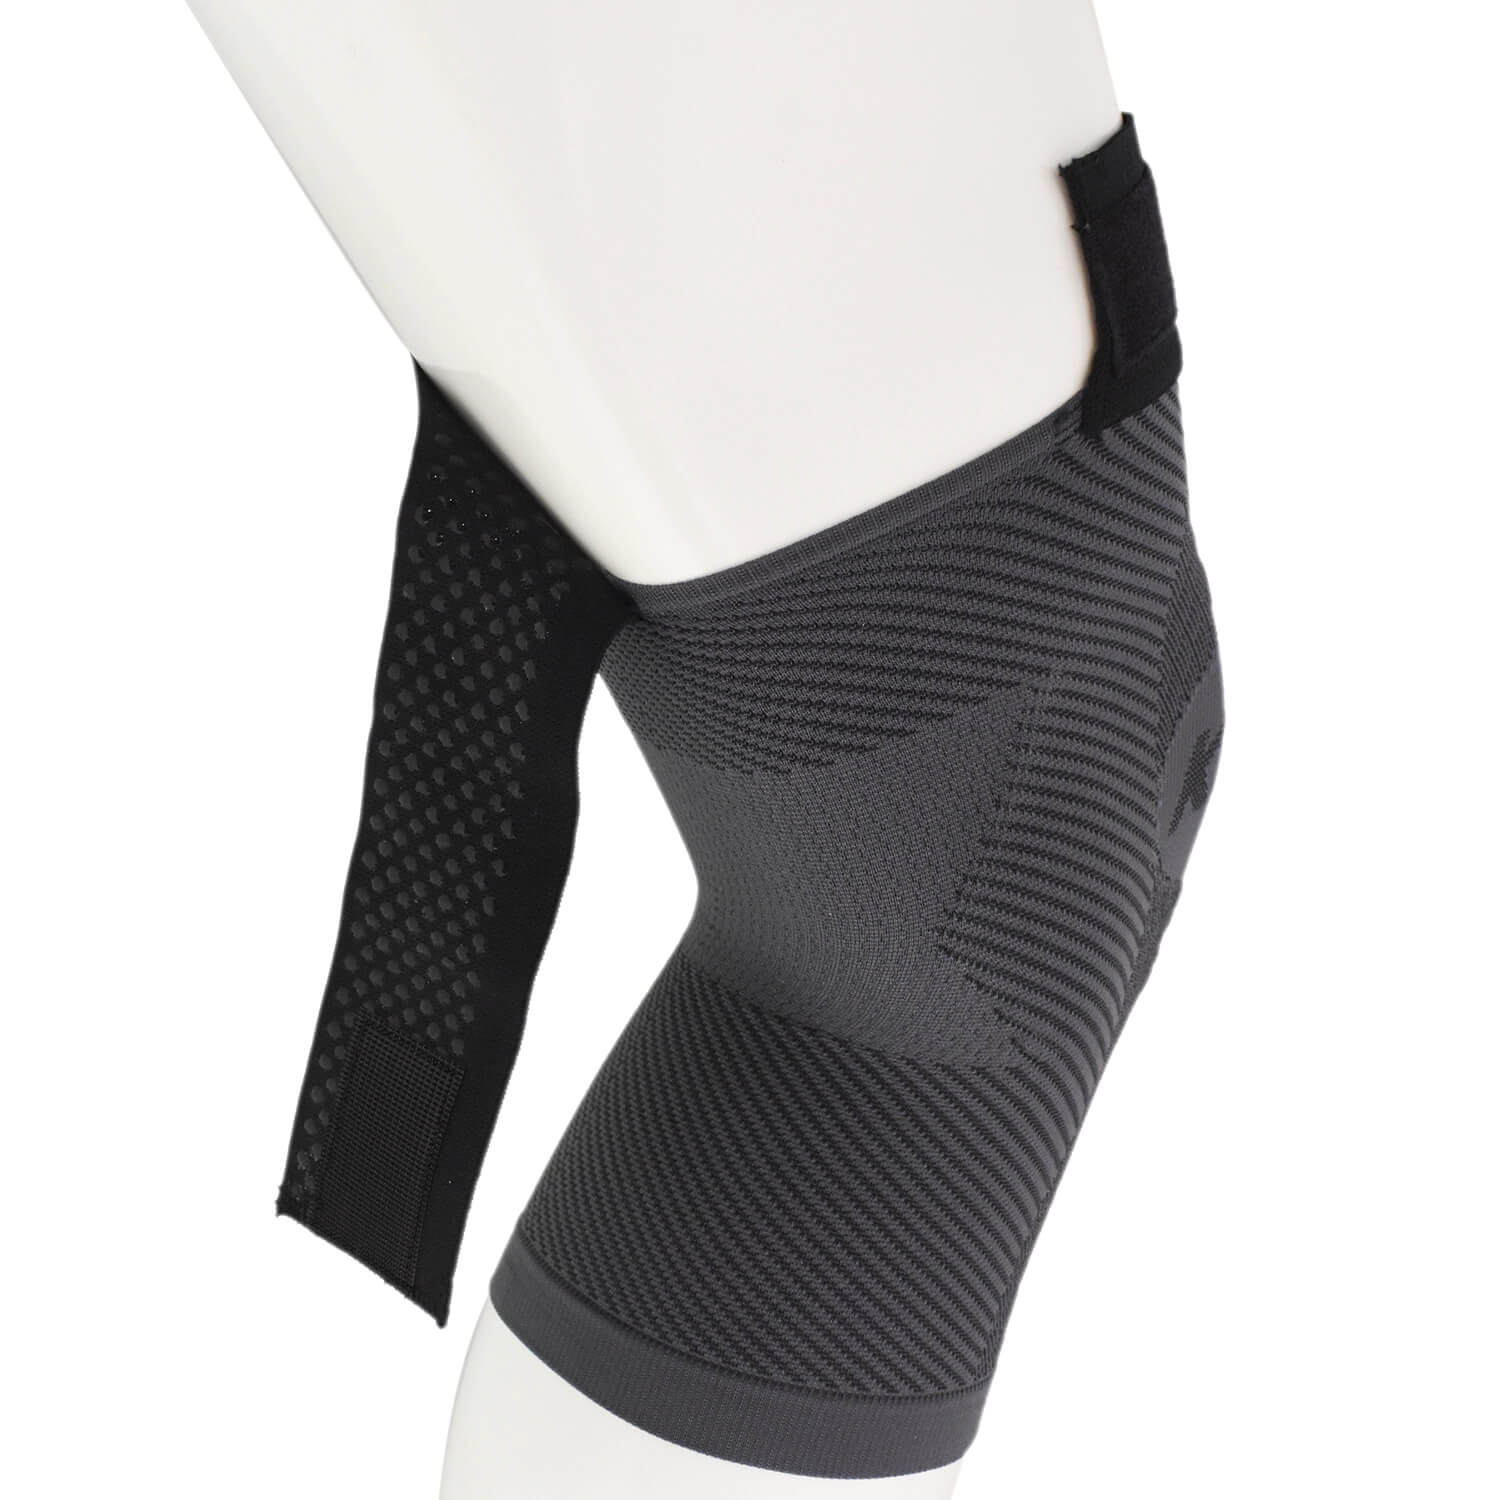 KS7+ Adjustable Performance Knee Sleeve For Pain Relief